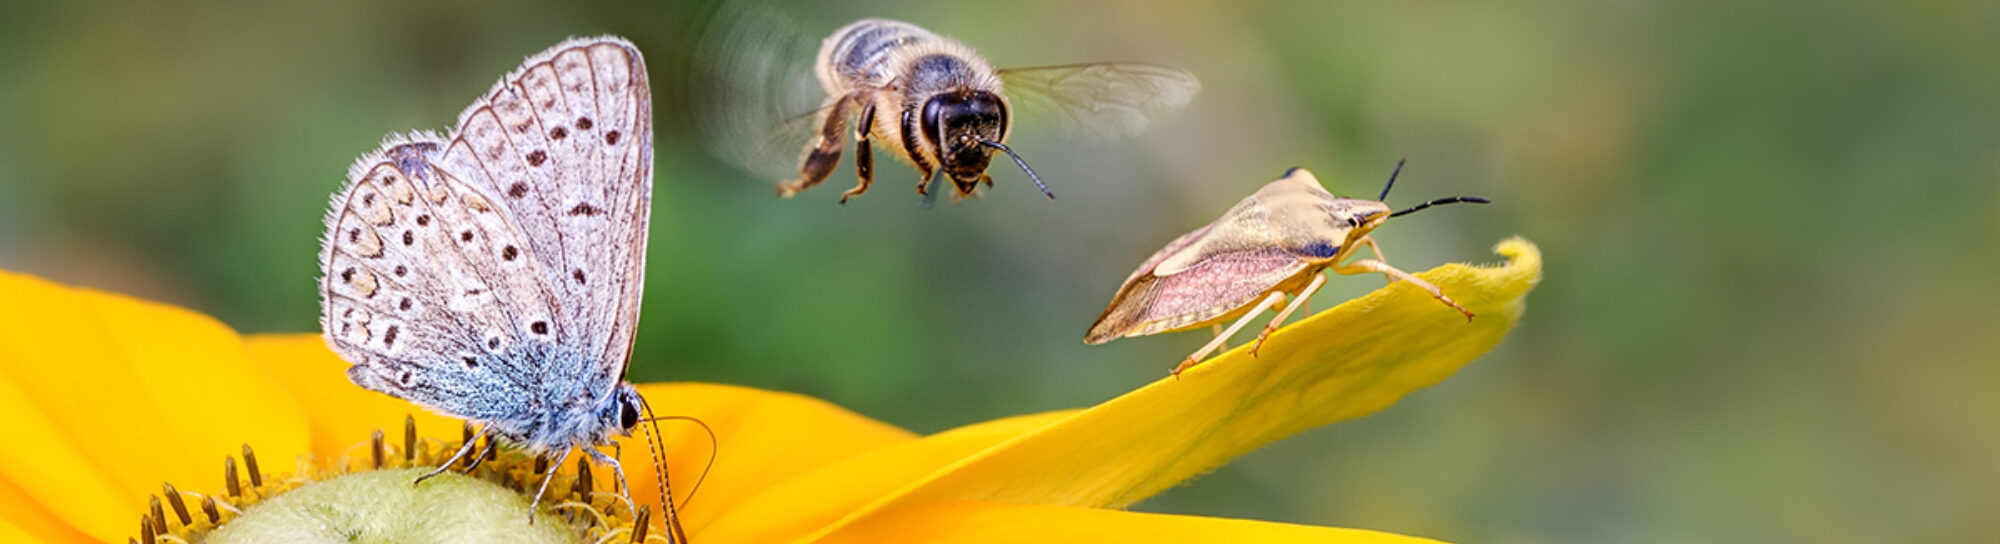 «Les pesticides sont responsables de la mort des insectes.»